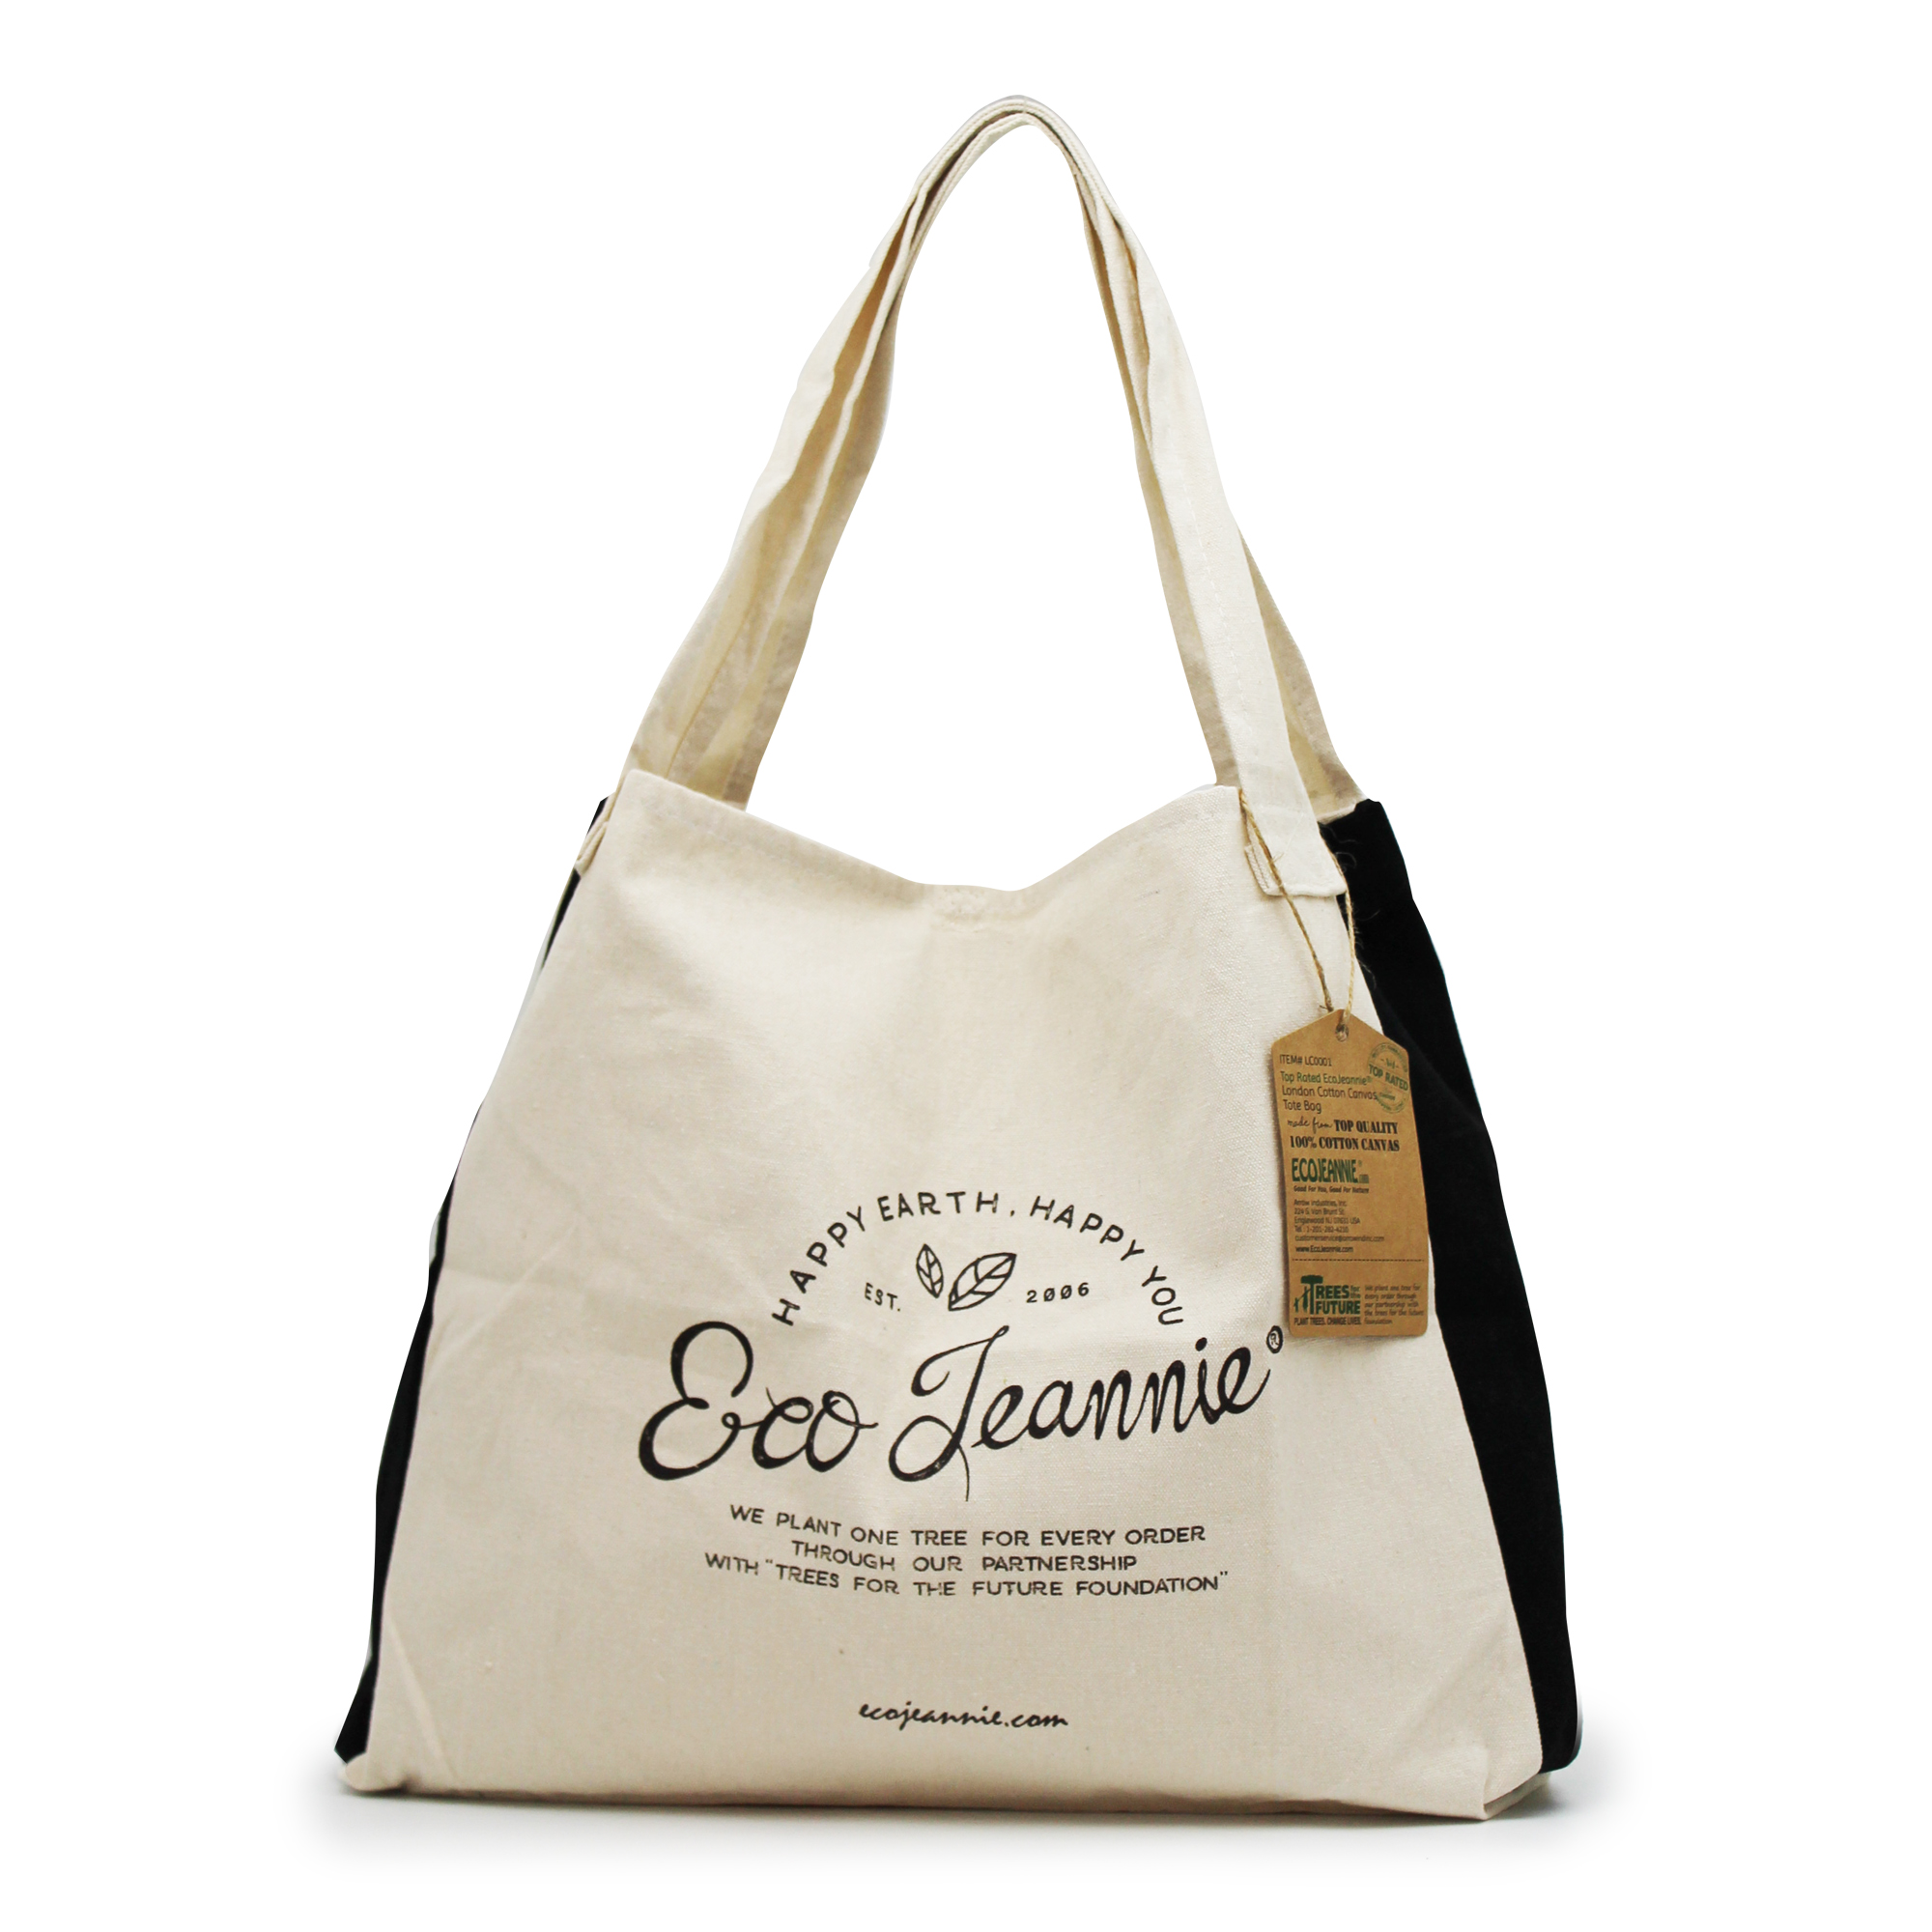 EcoJeannie (2 Bags) 100% Cotton Canvas Reusable Tote Bag w/Inner Pocket, Gusset and Closure Strips, Multi Use bag, Shoulder Bag, Travel Tote, Picnic Bag, 24-7 Bag, School Bag - image 4 of 4